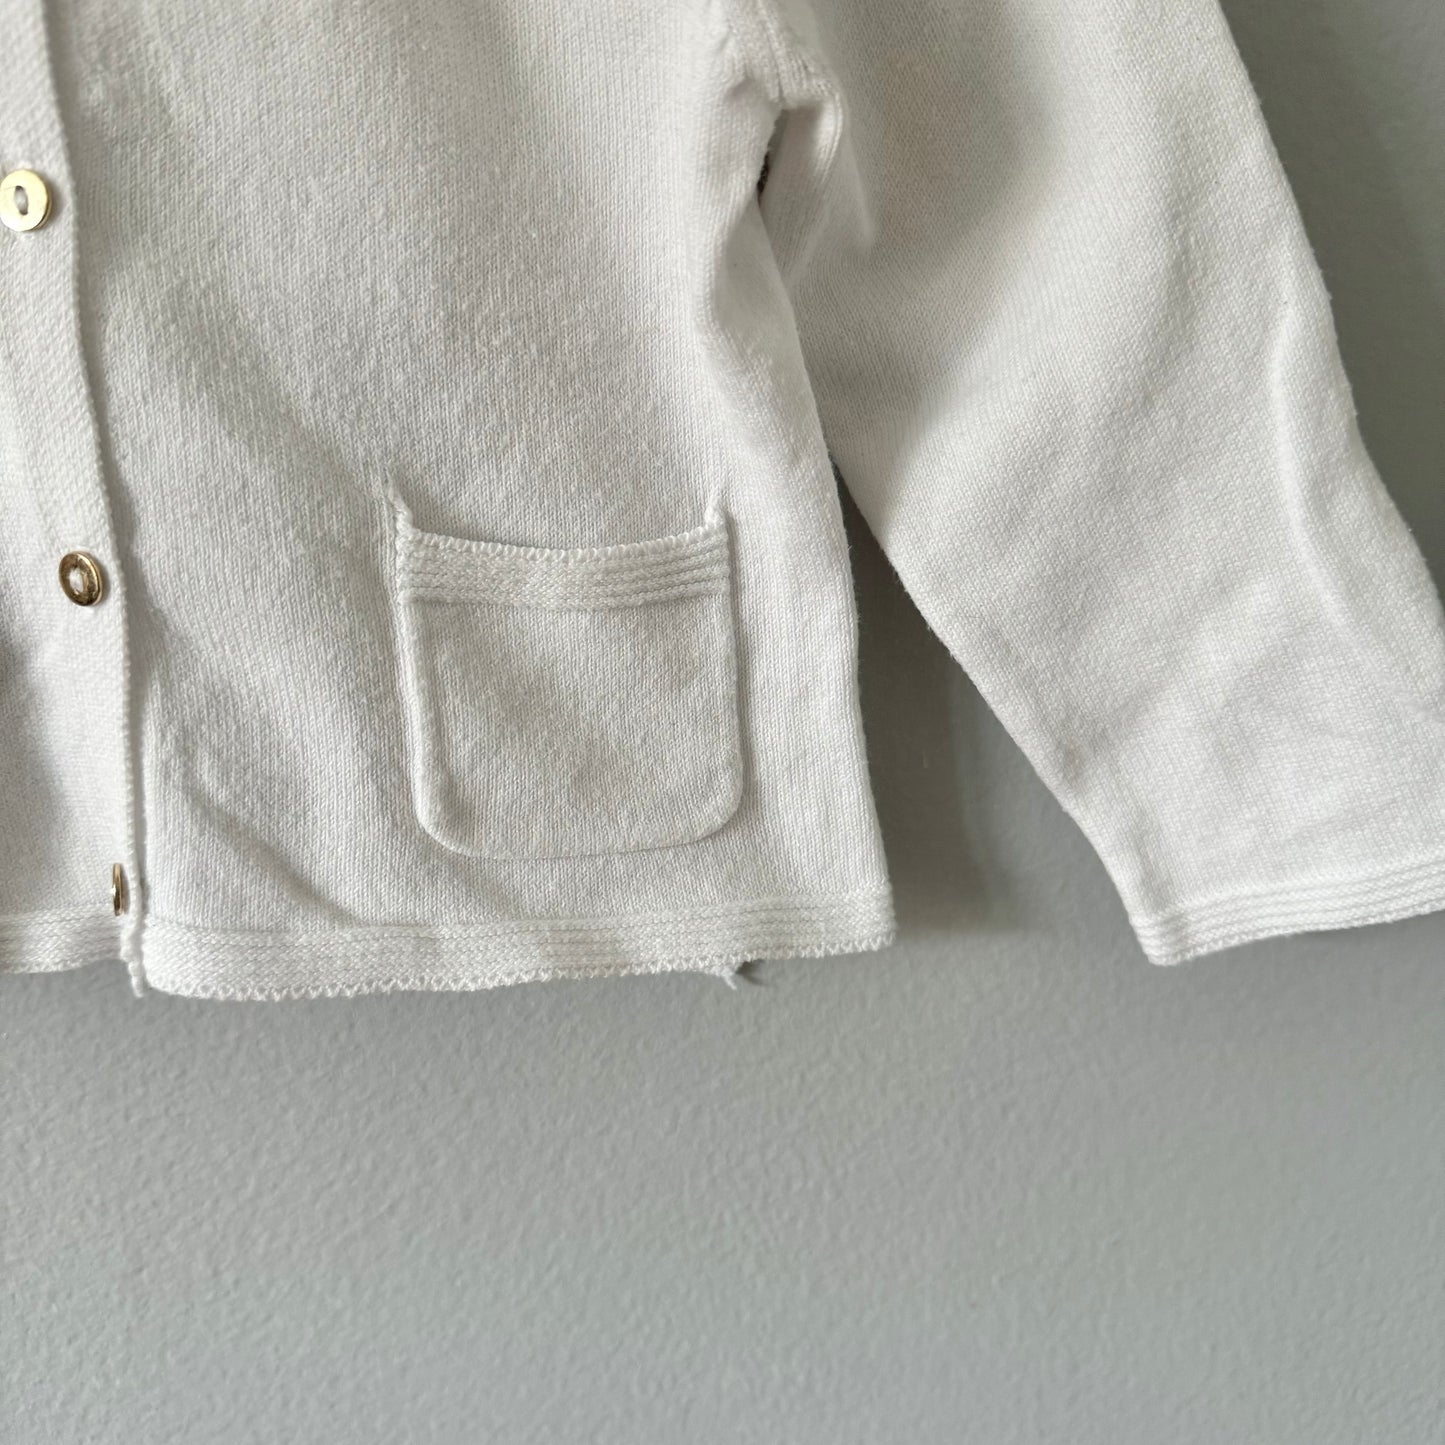 Zara / White cotton knit cardigan / 9-12M